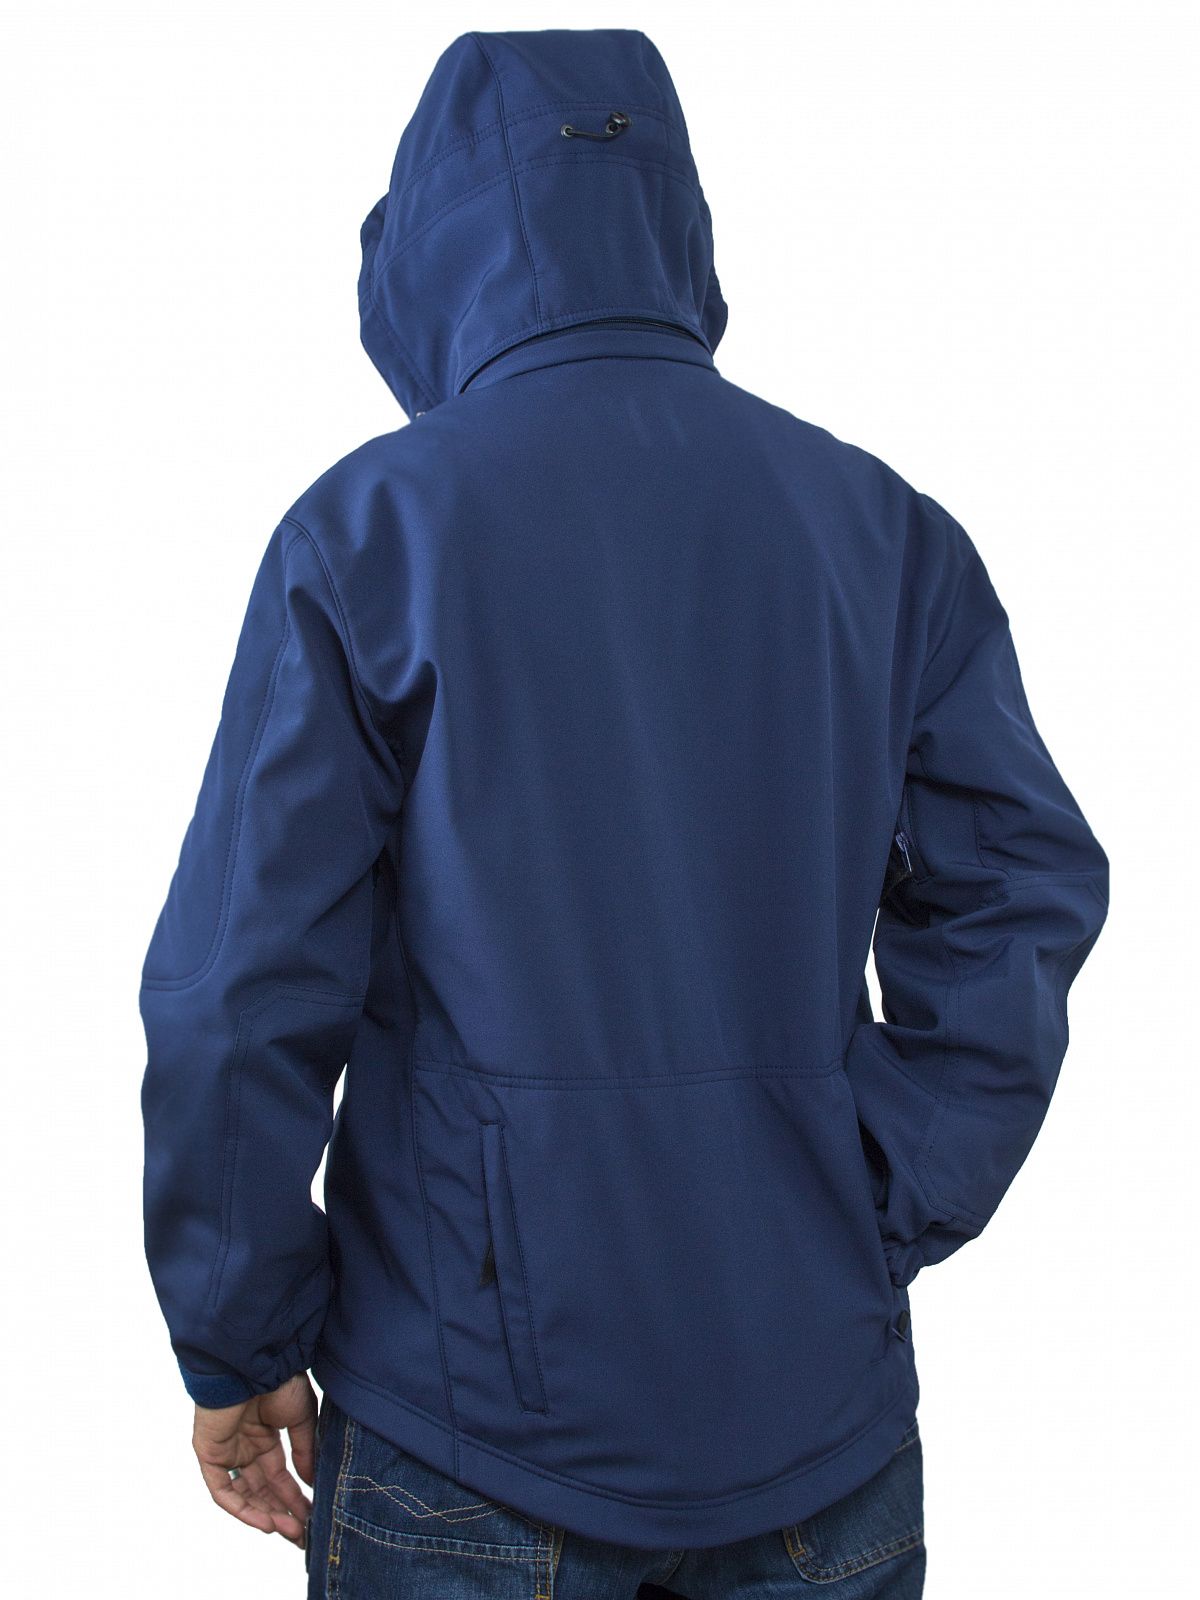 Mistral anorak jacket